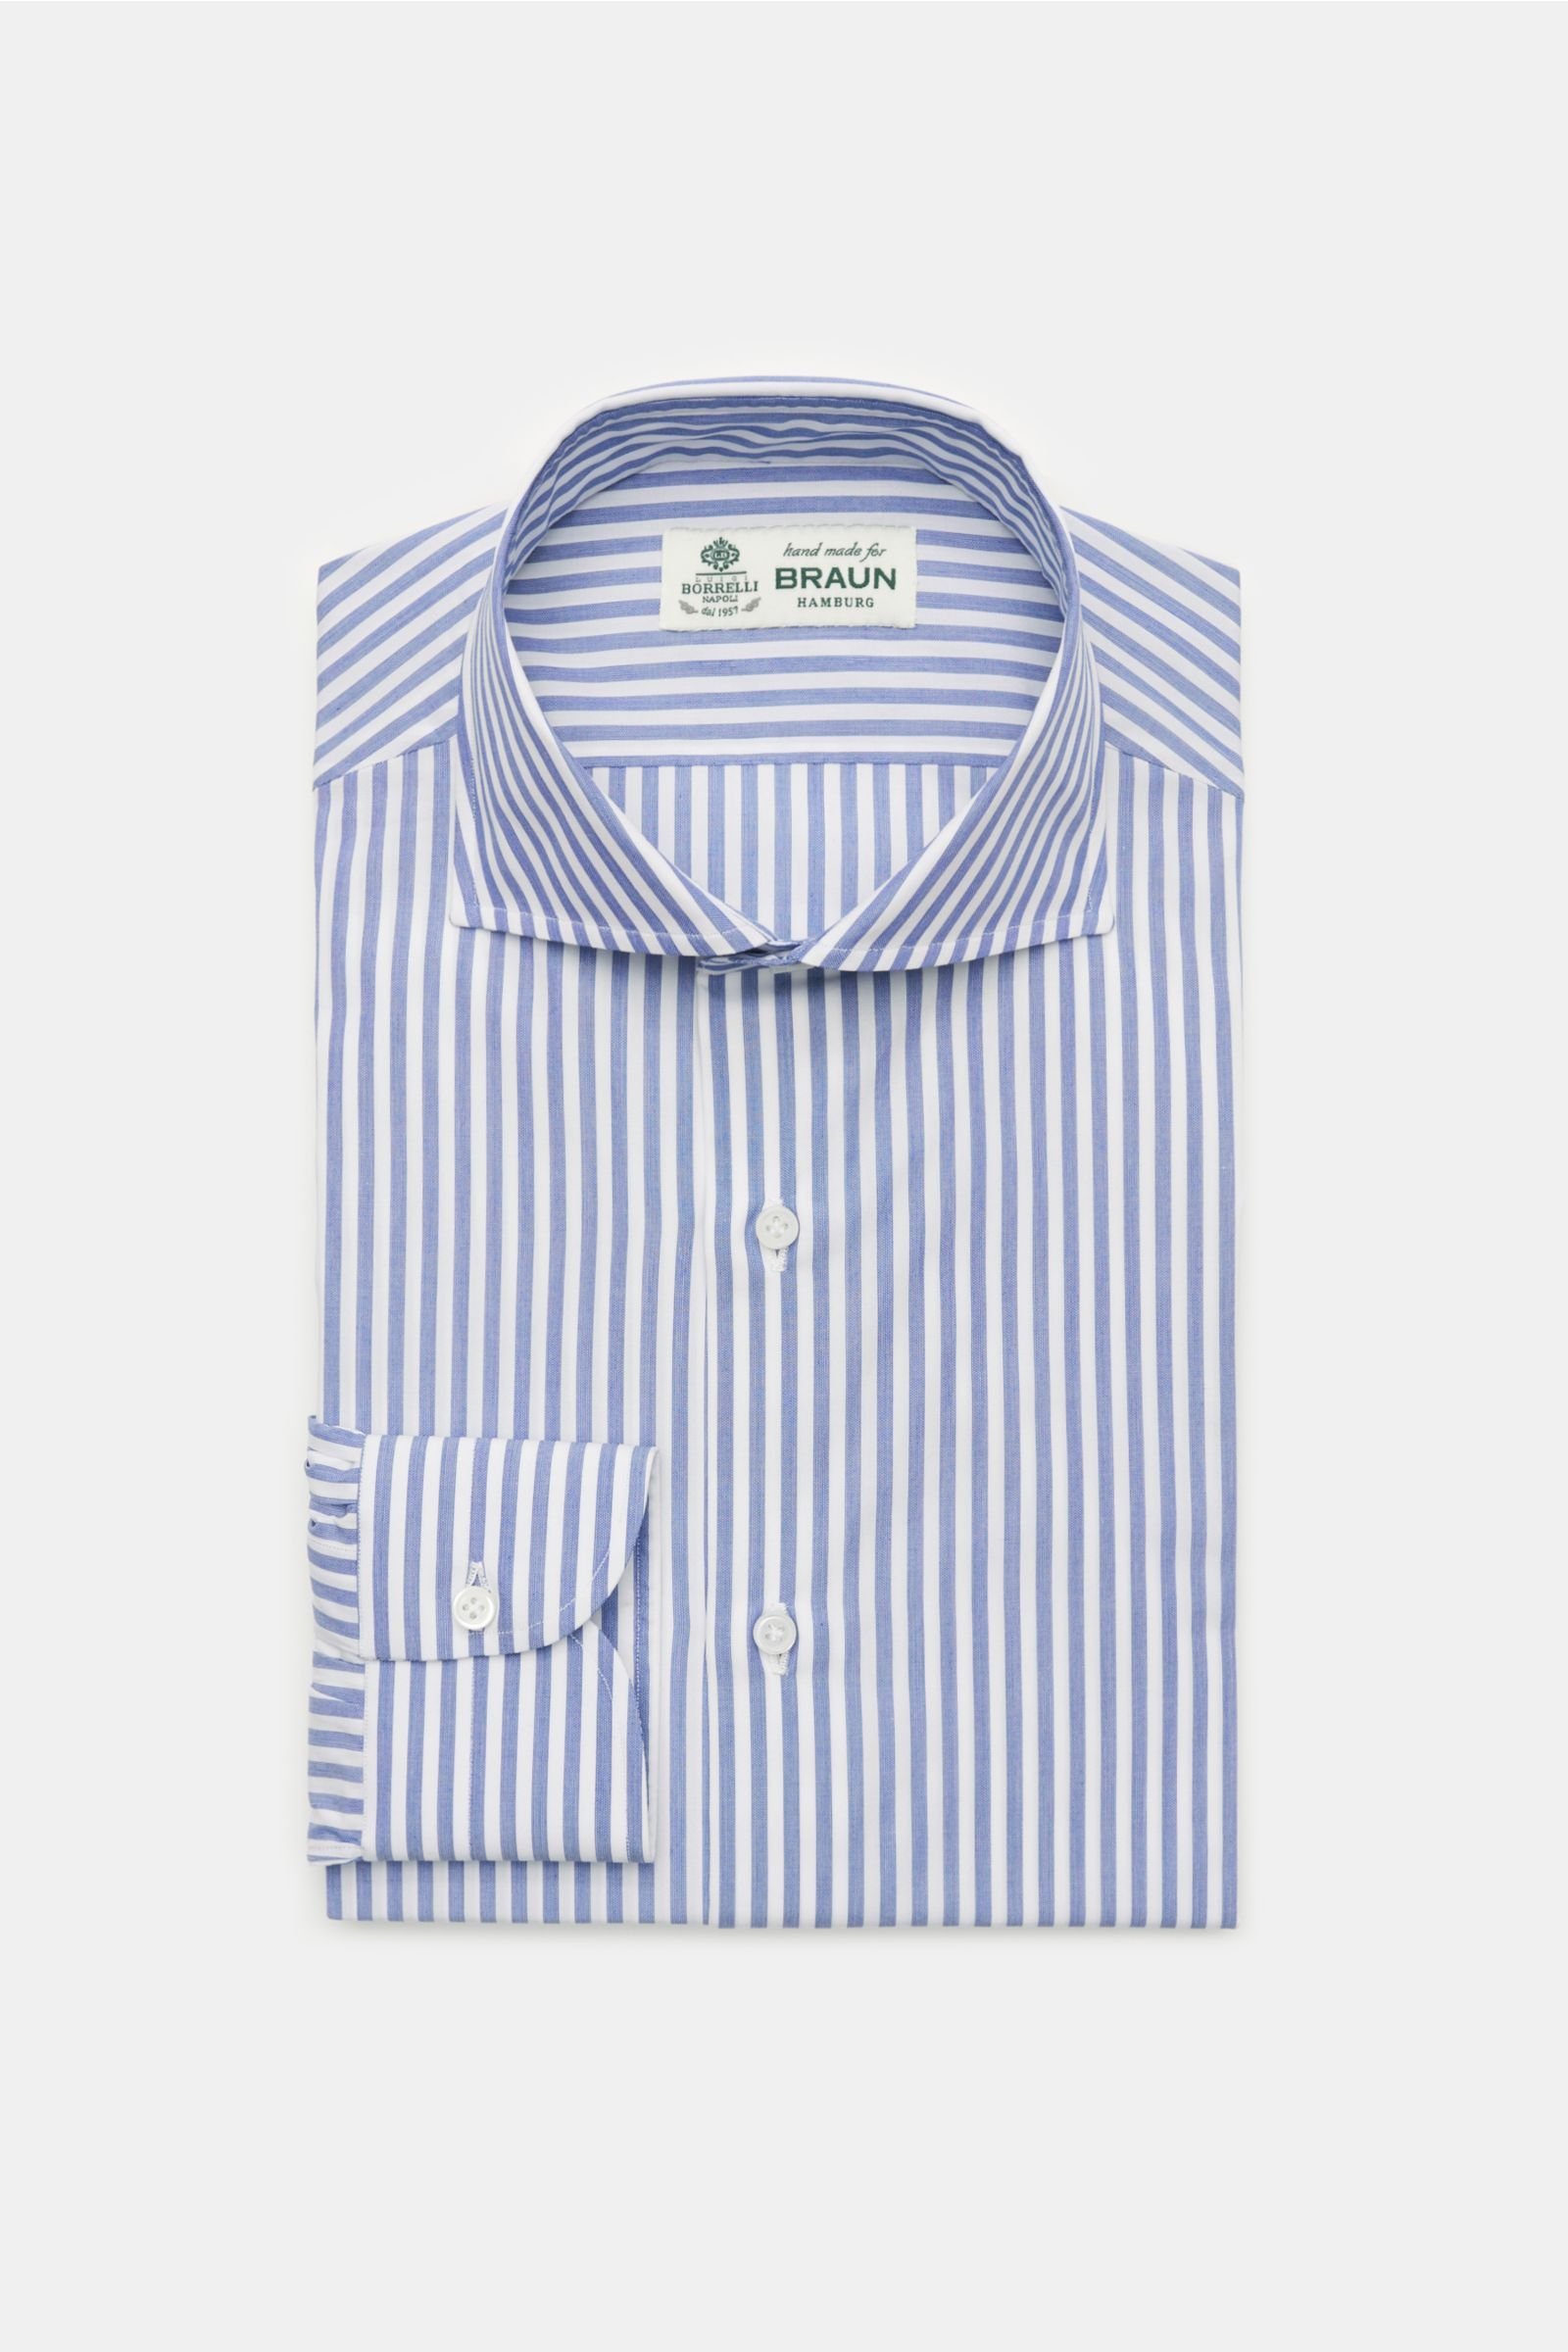 Business shirt 'Nando' shark collar navy/white striped